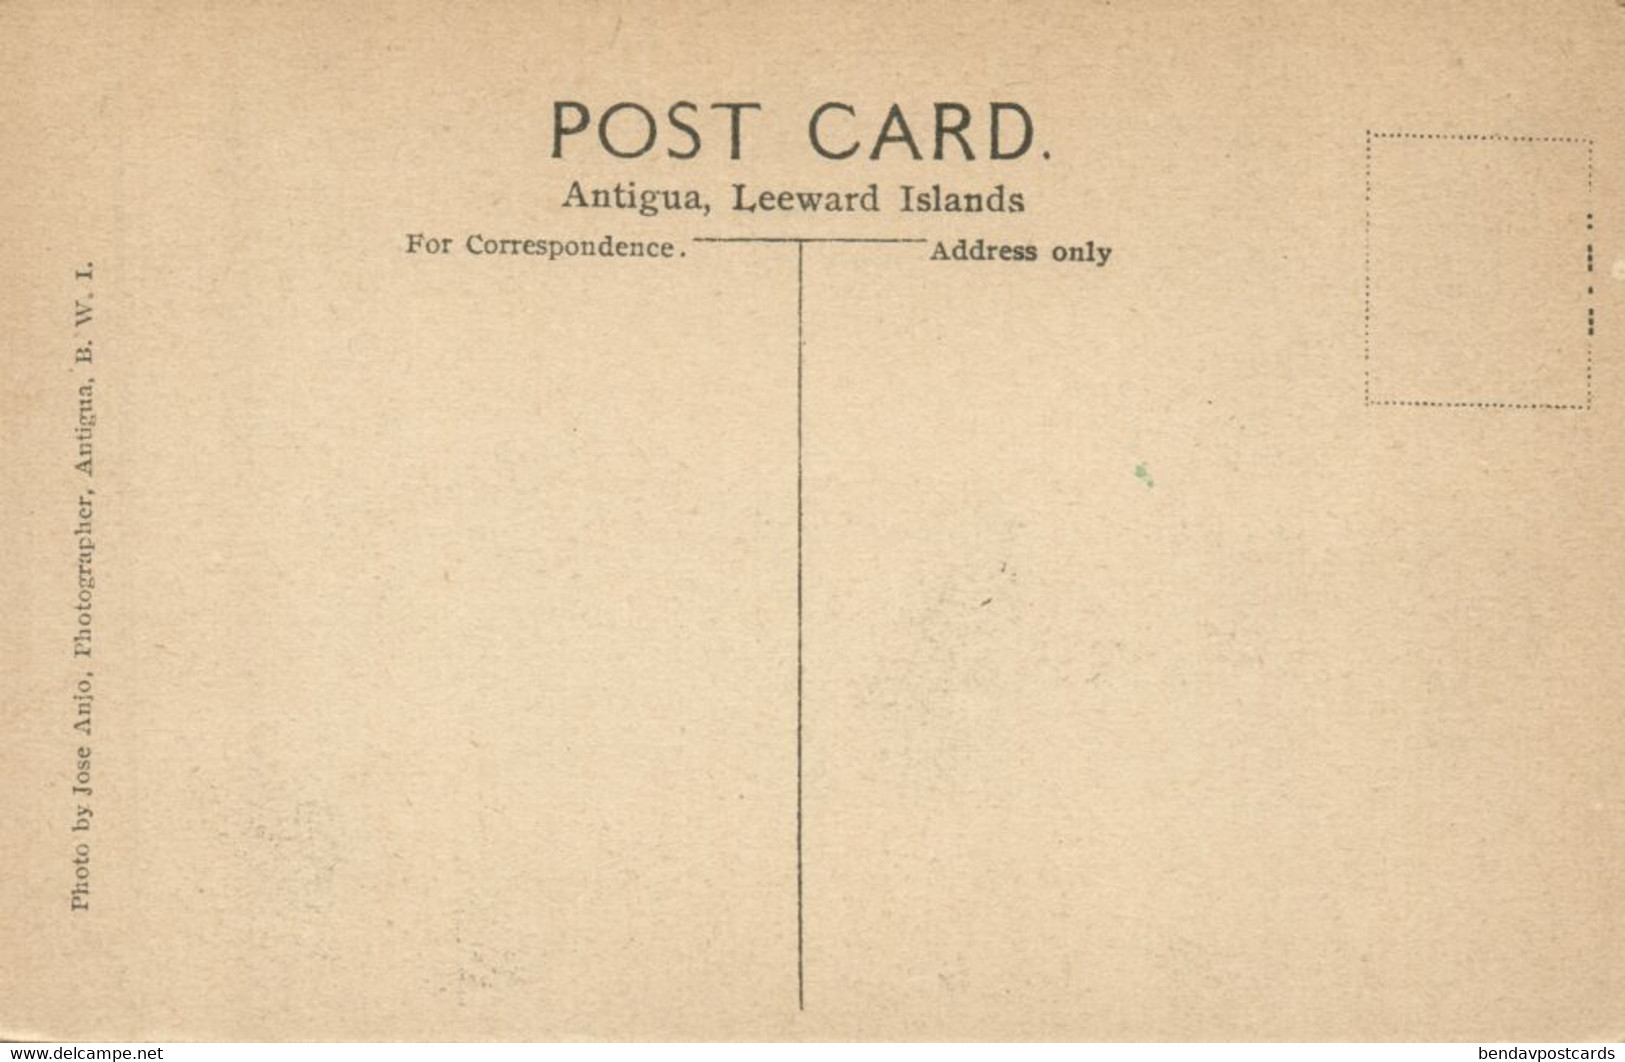 Antigua, B.W.I., St. John's, Entrance To Dockyard (1910s) Postcard - Antigua & Barbuda